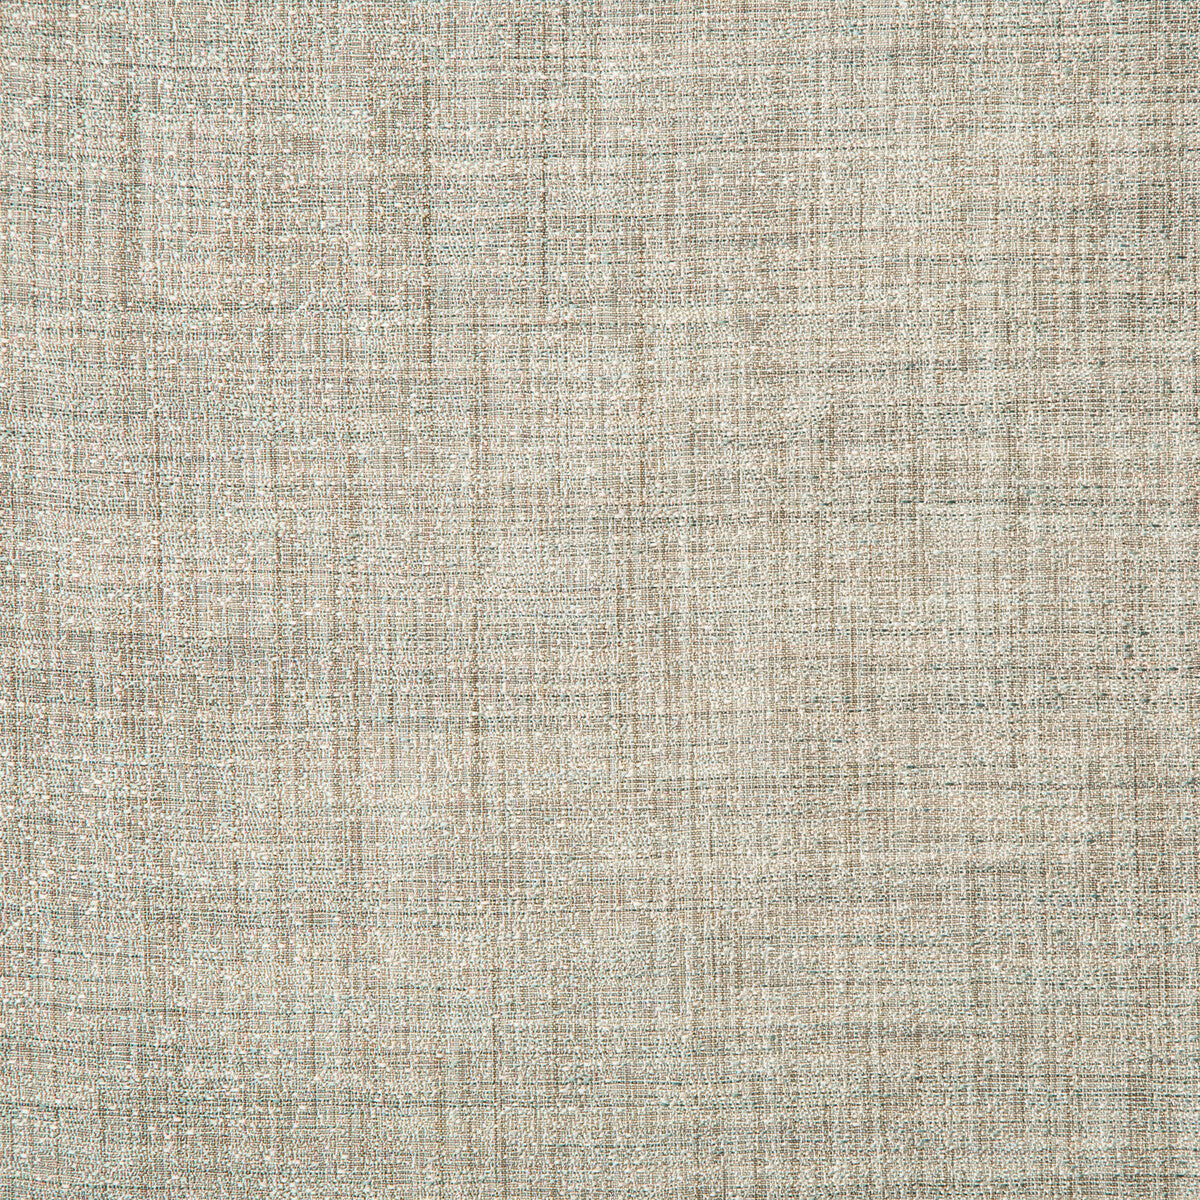 Kravet Basics fabric in 4650-135 color - pattern 4650.135.0 - by Kravet Contract